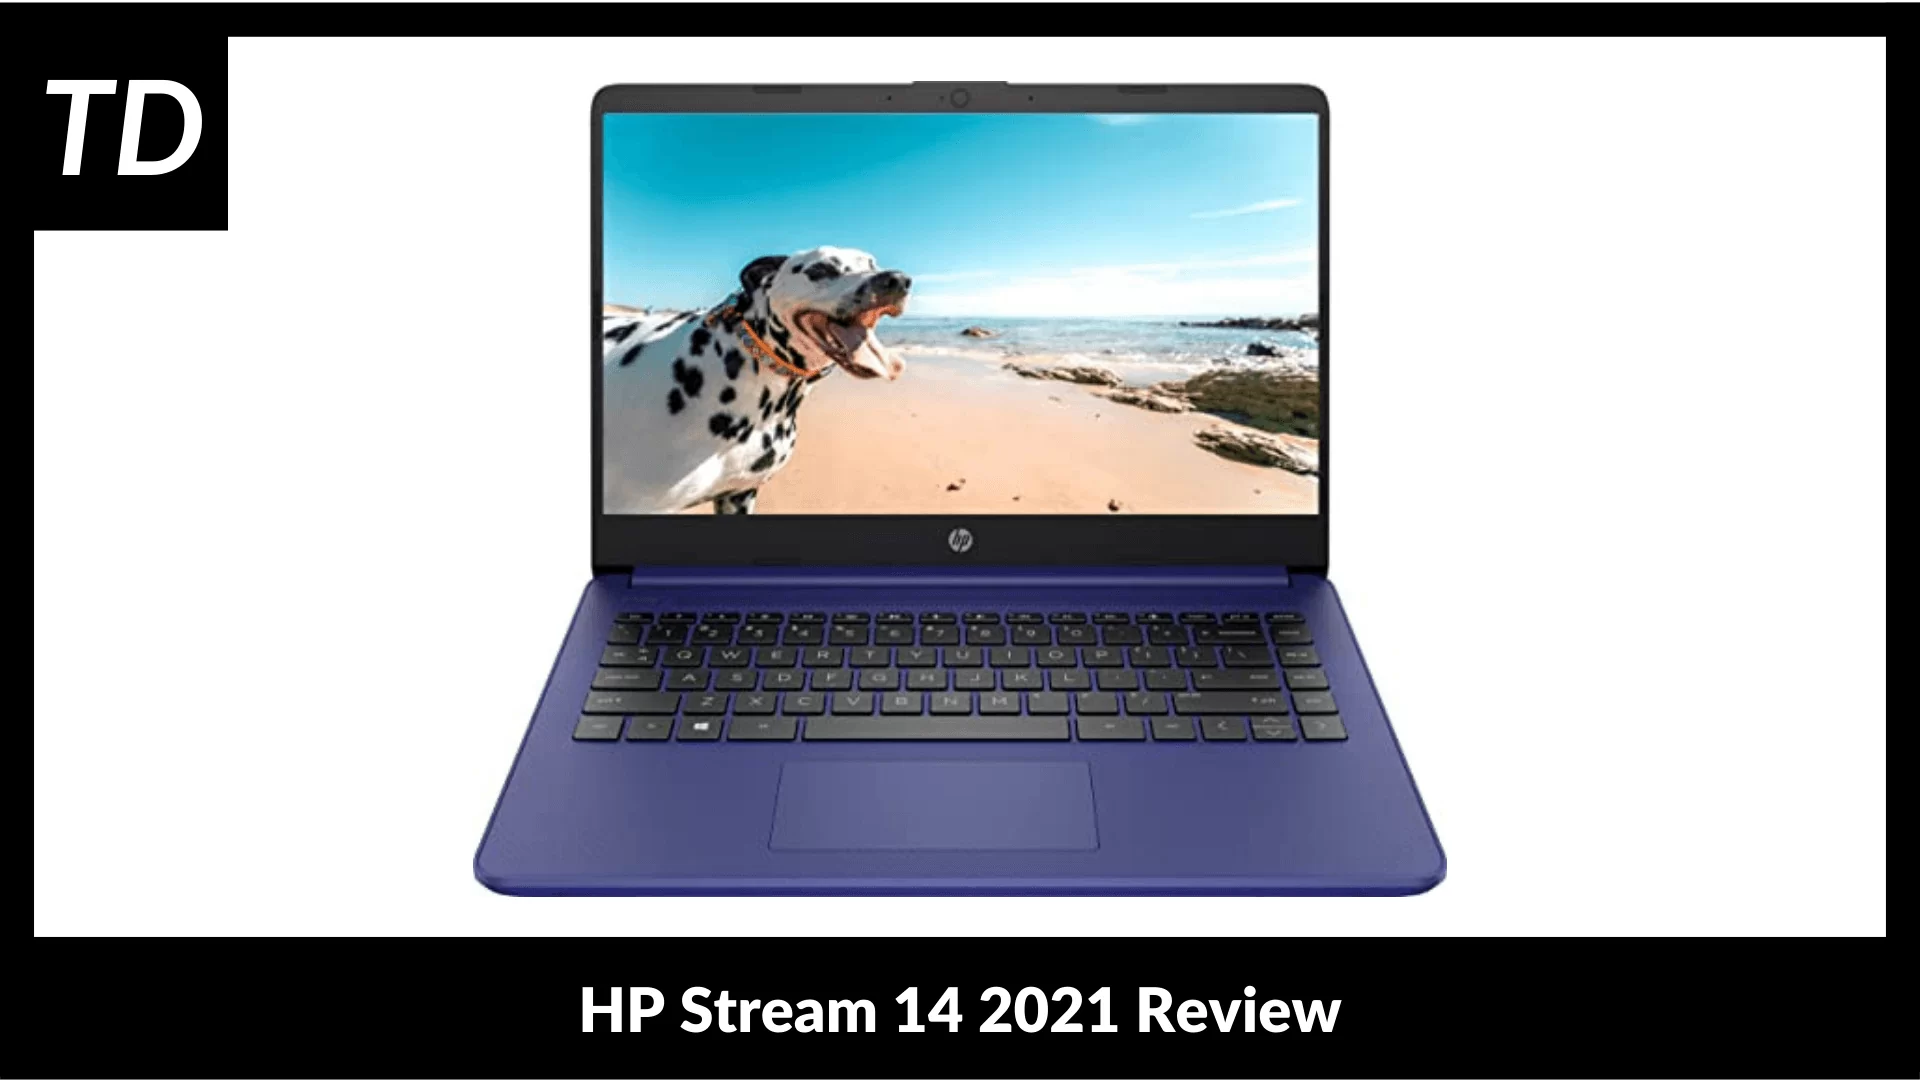 HP Stream 14 2021